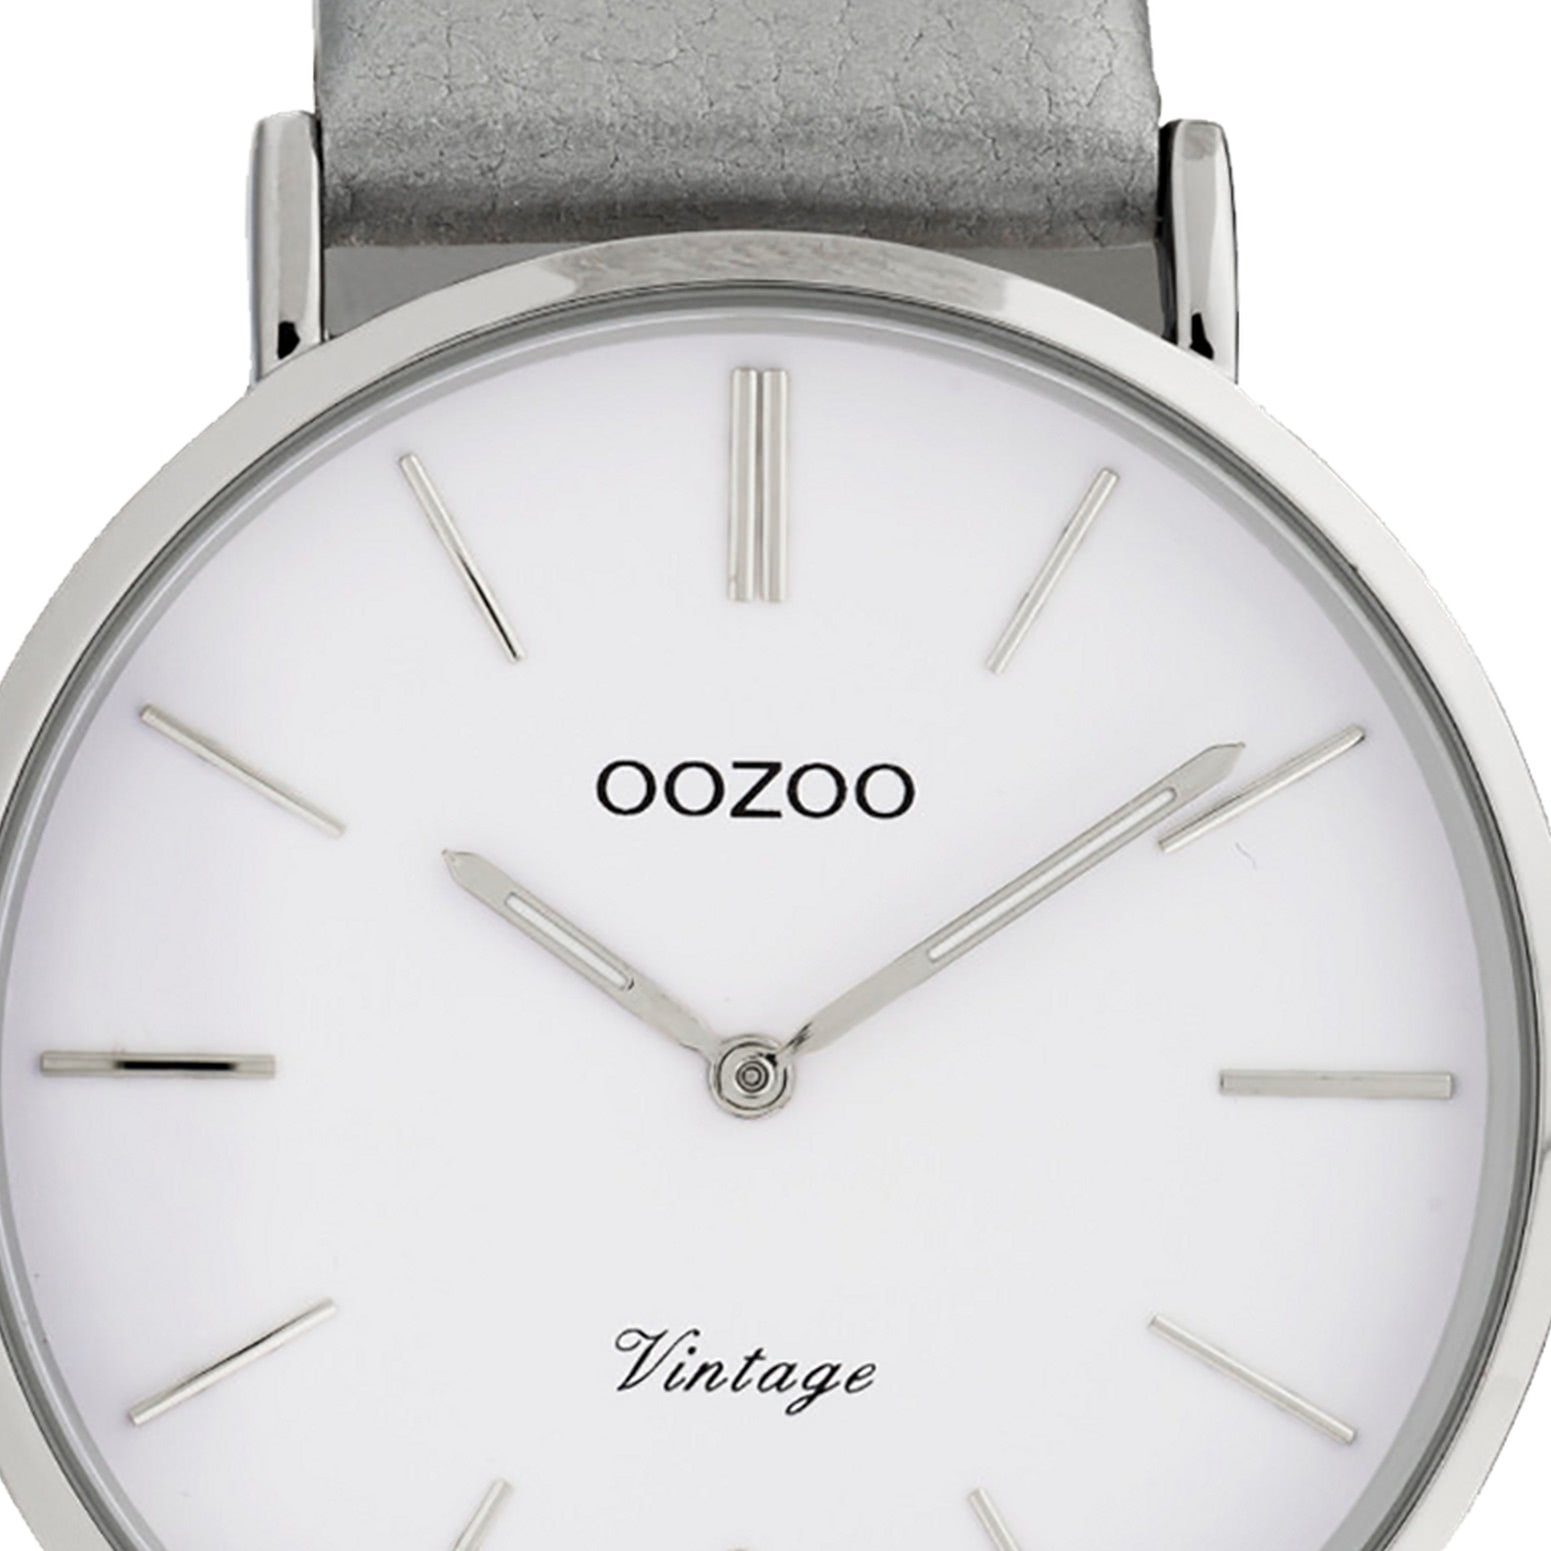 OOZOO Quarzuhr Oozoo Damen Armbanduhr Lederarmband, groß grau, Damenuhr Fashion-Style 40mm) rund, (ca